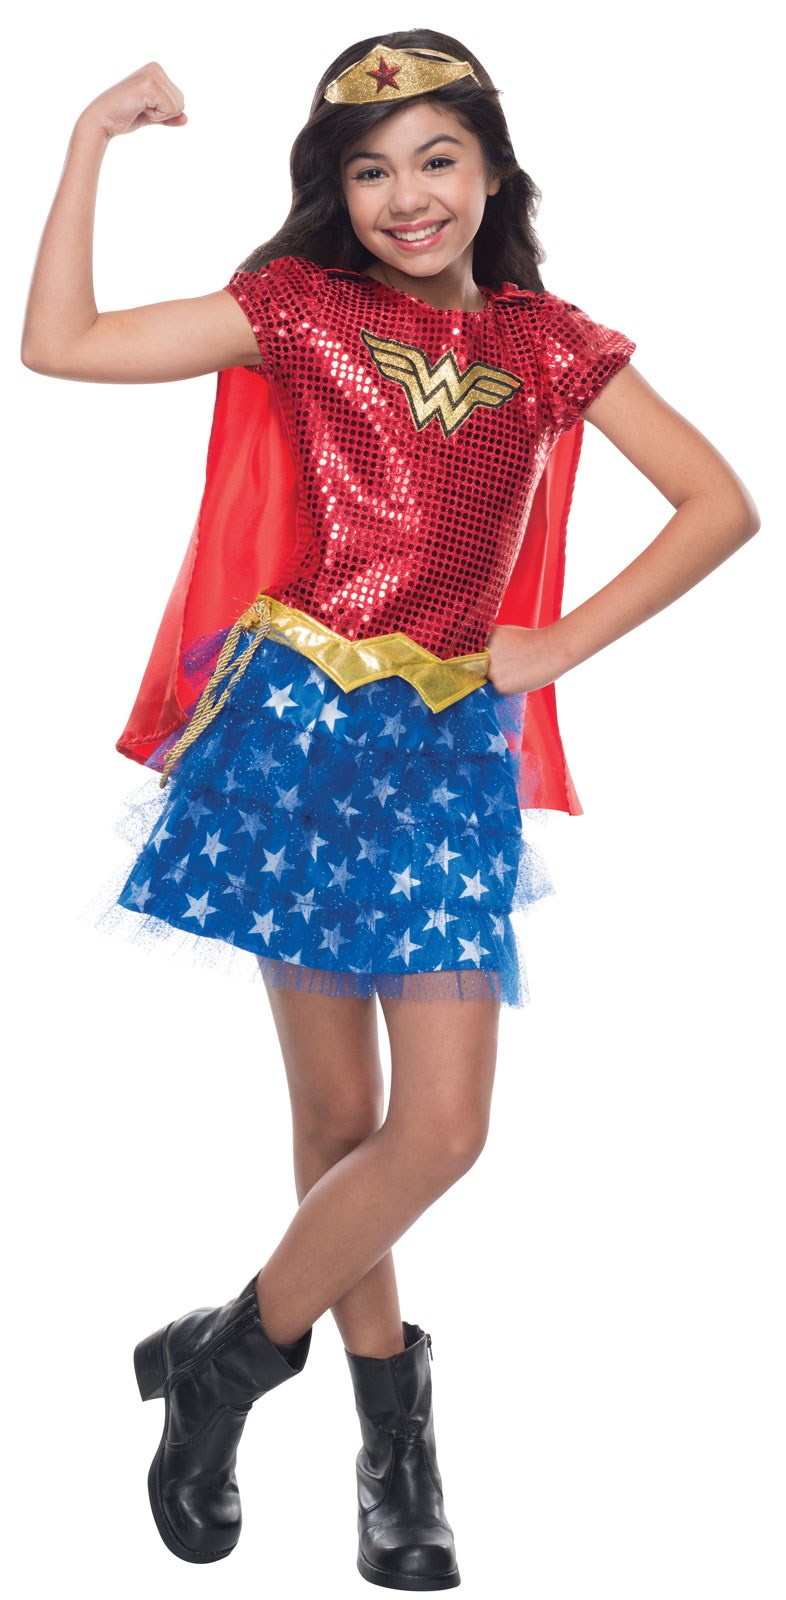 Sequin Wonder Woman Toddler Costume